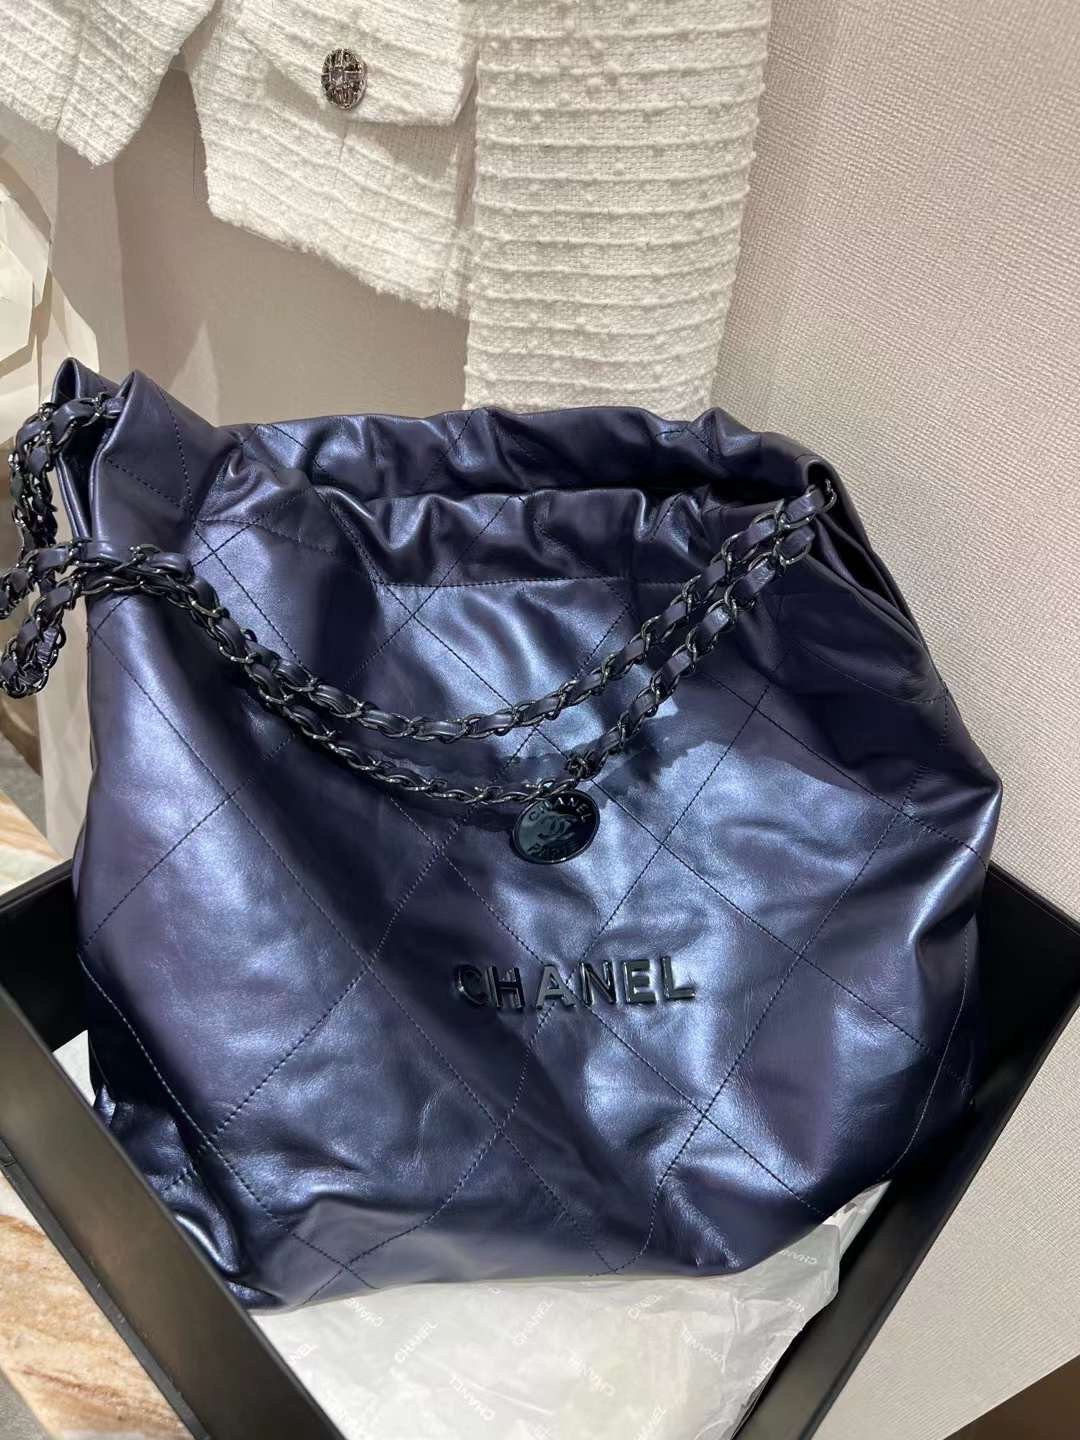 【P2220】香奈儿包包官网 Chanel 22 Bag灰蓝色菱格纹光面皮链条购物袋